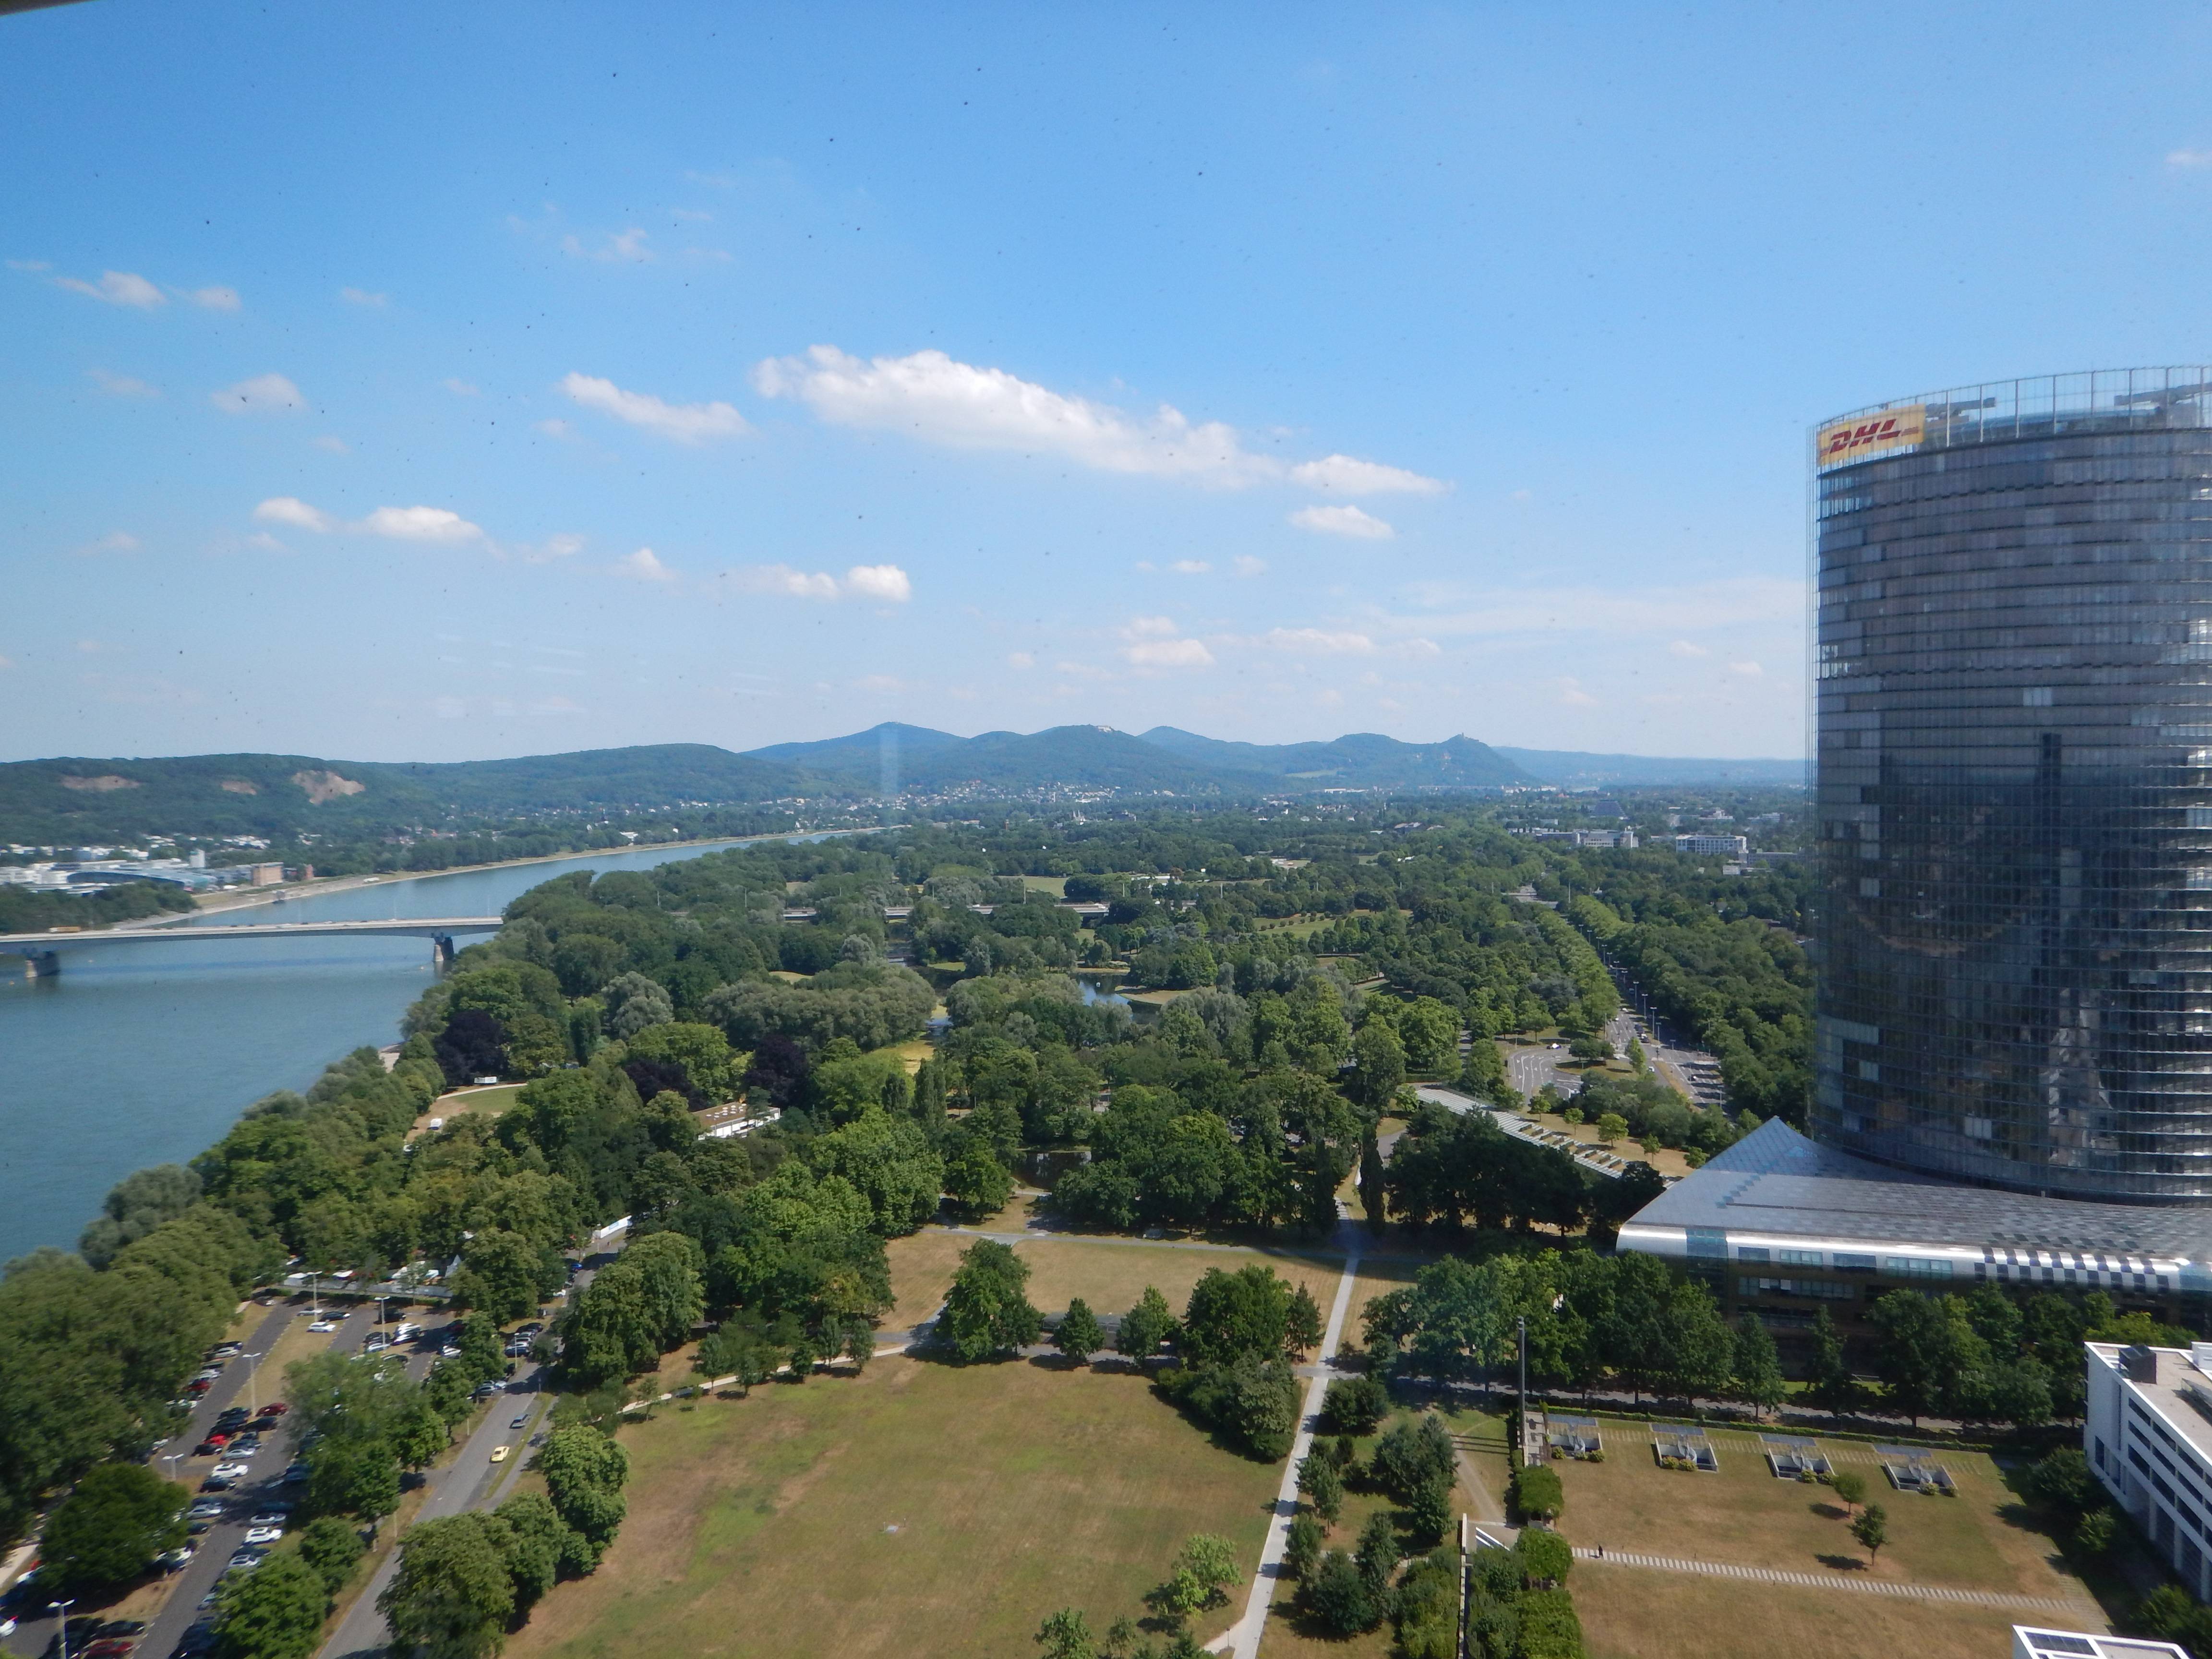 Bonn and the river rhine